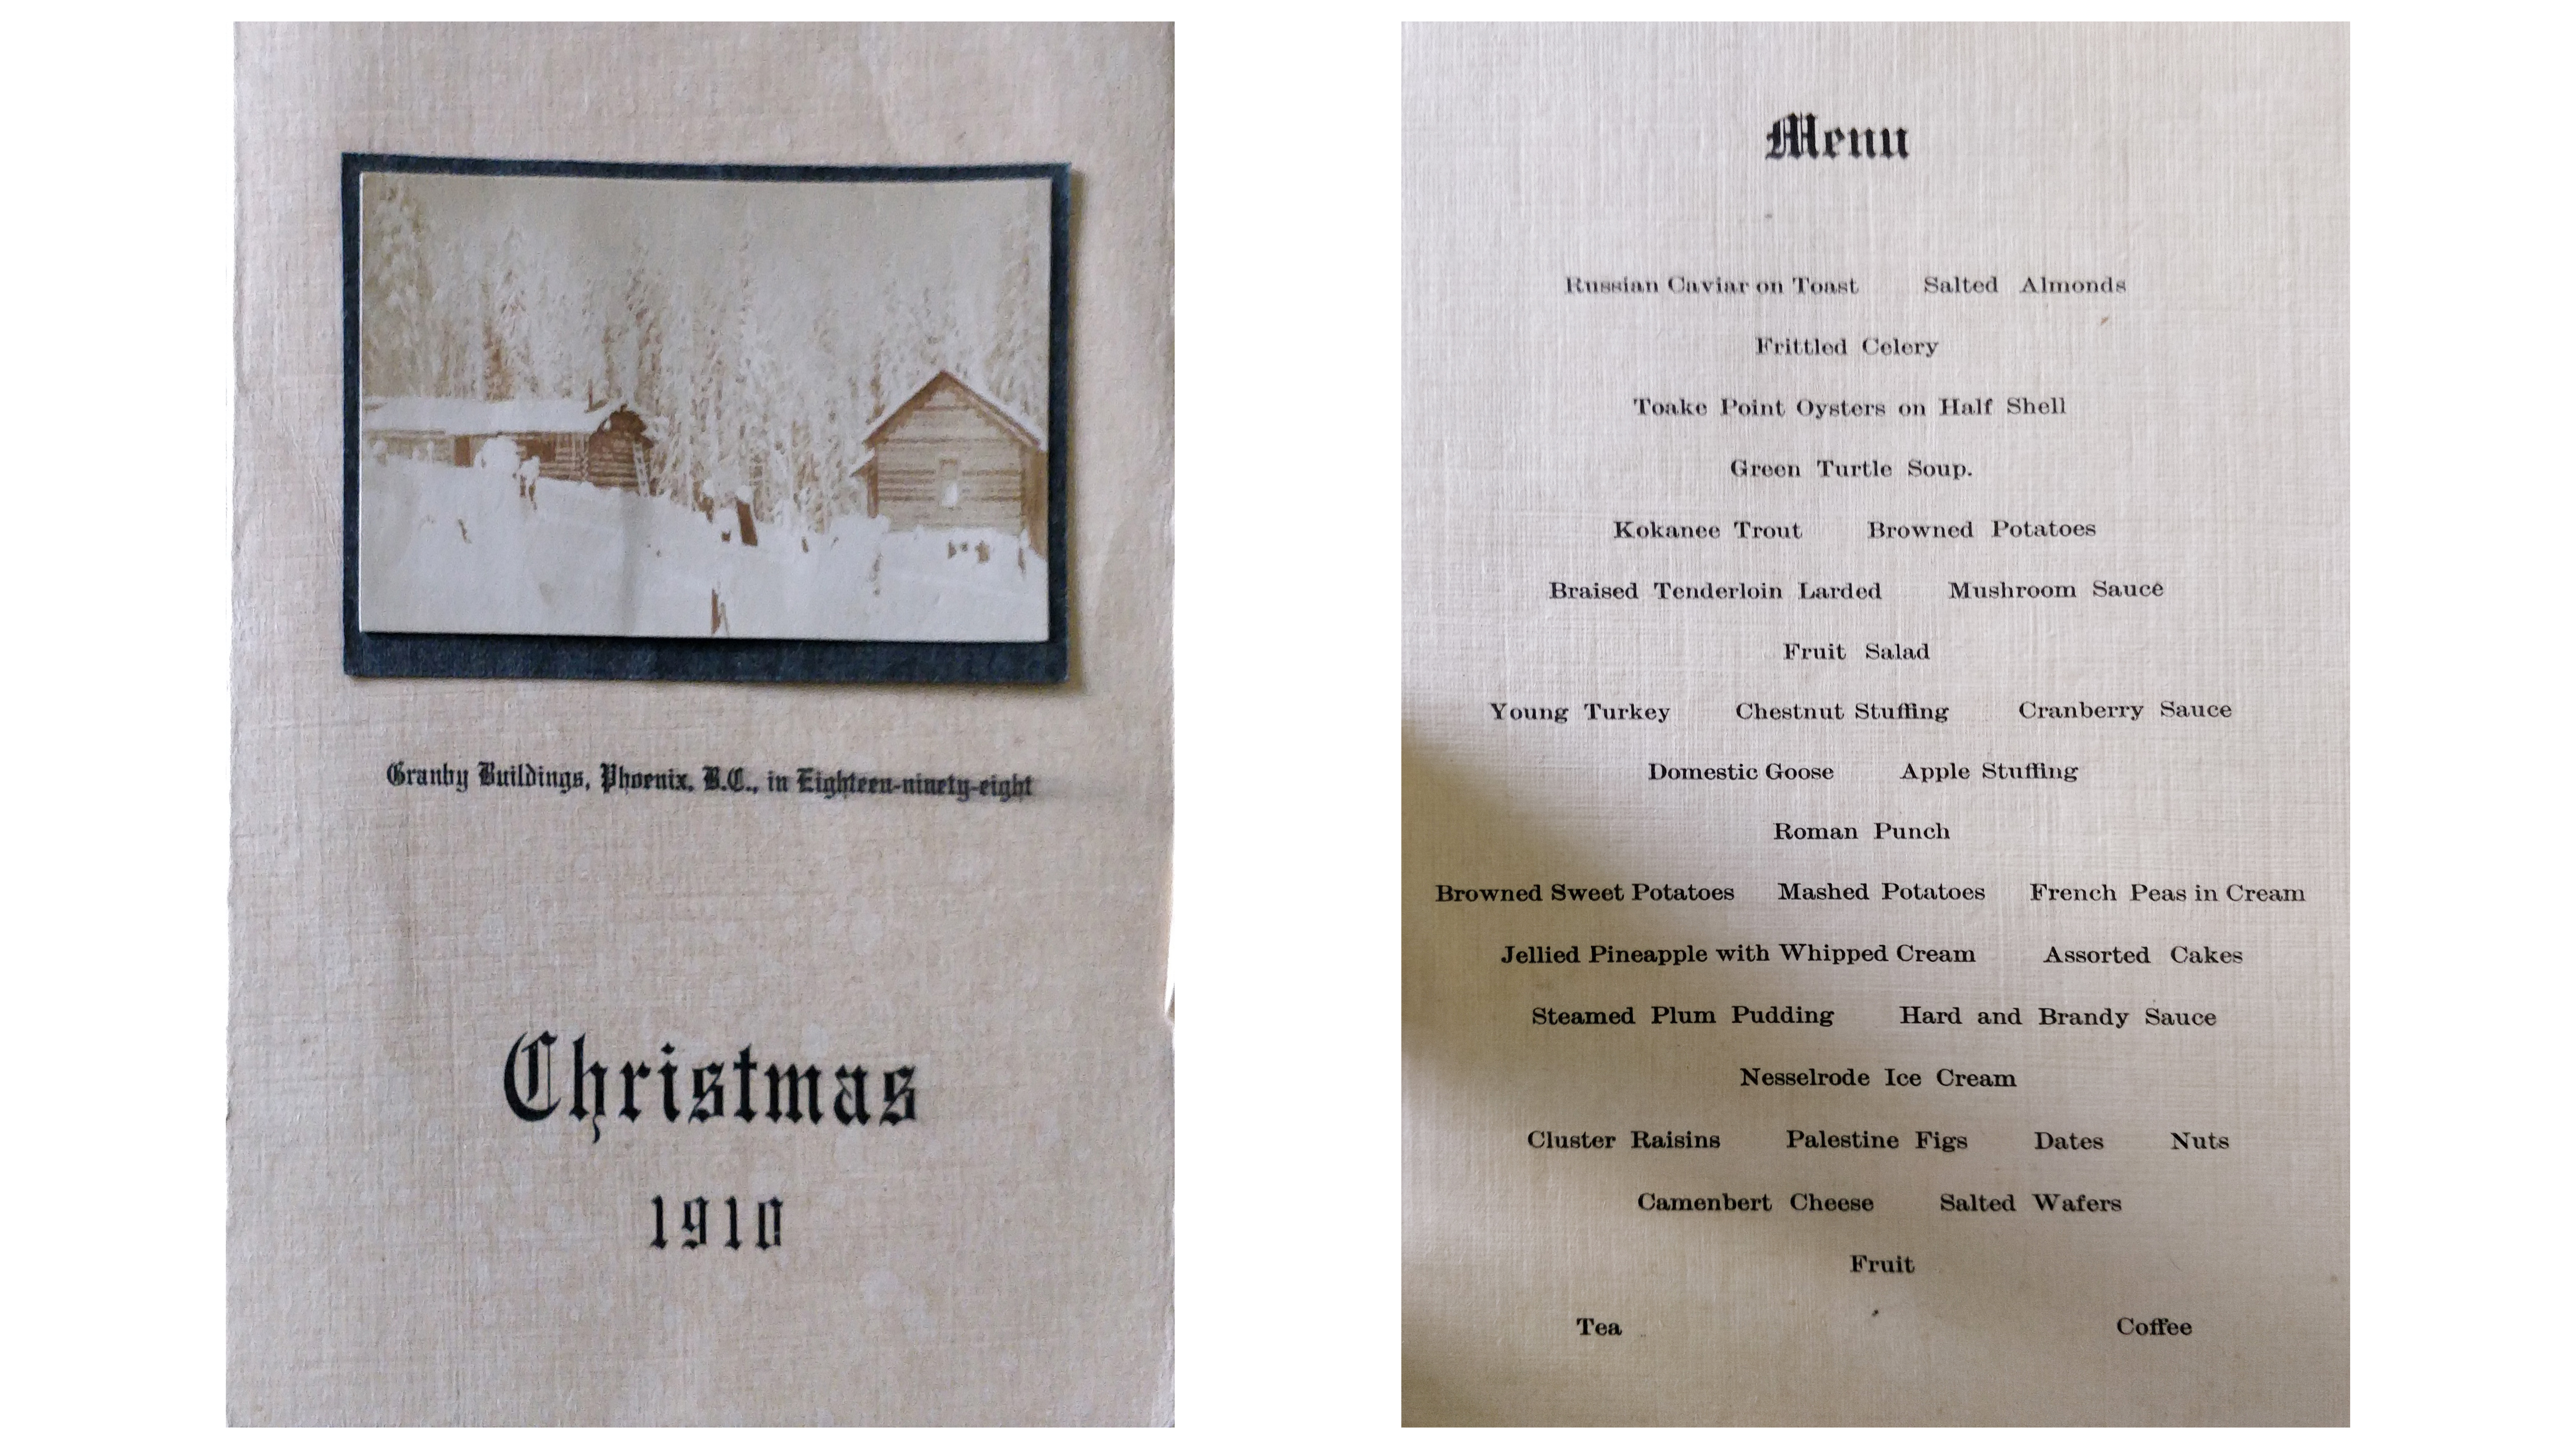 The 1910 Christmas menu at the Granby Hotel, Phoenix, British Columbia, Canada.